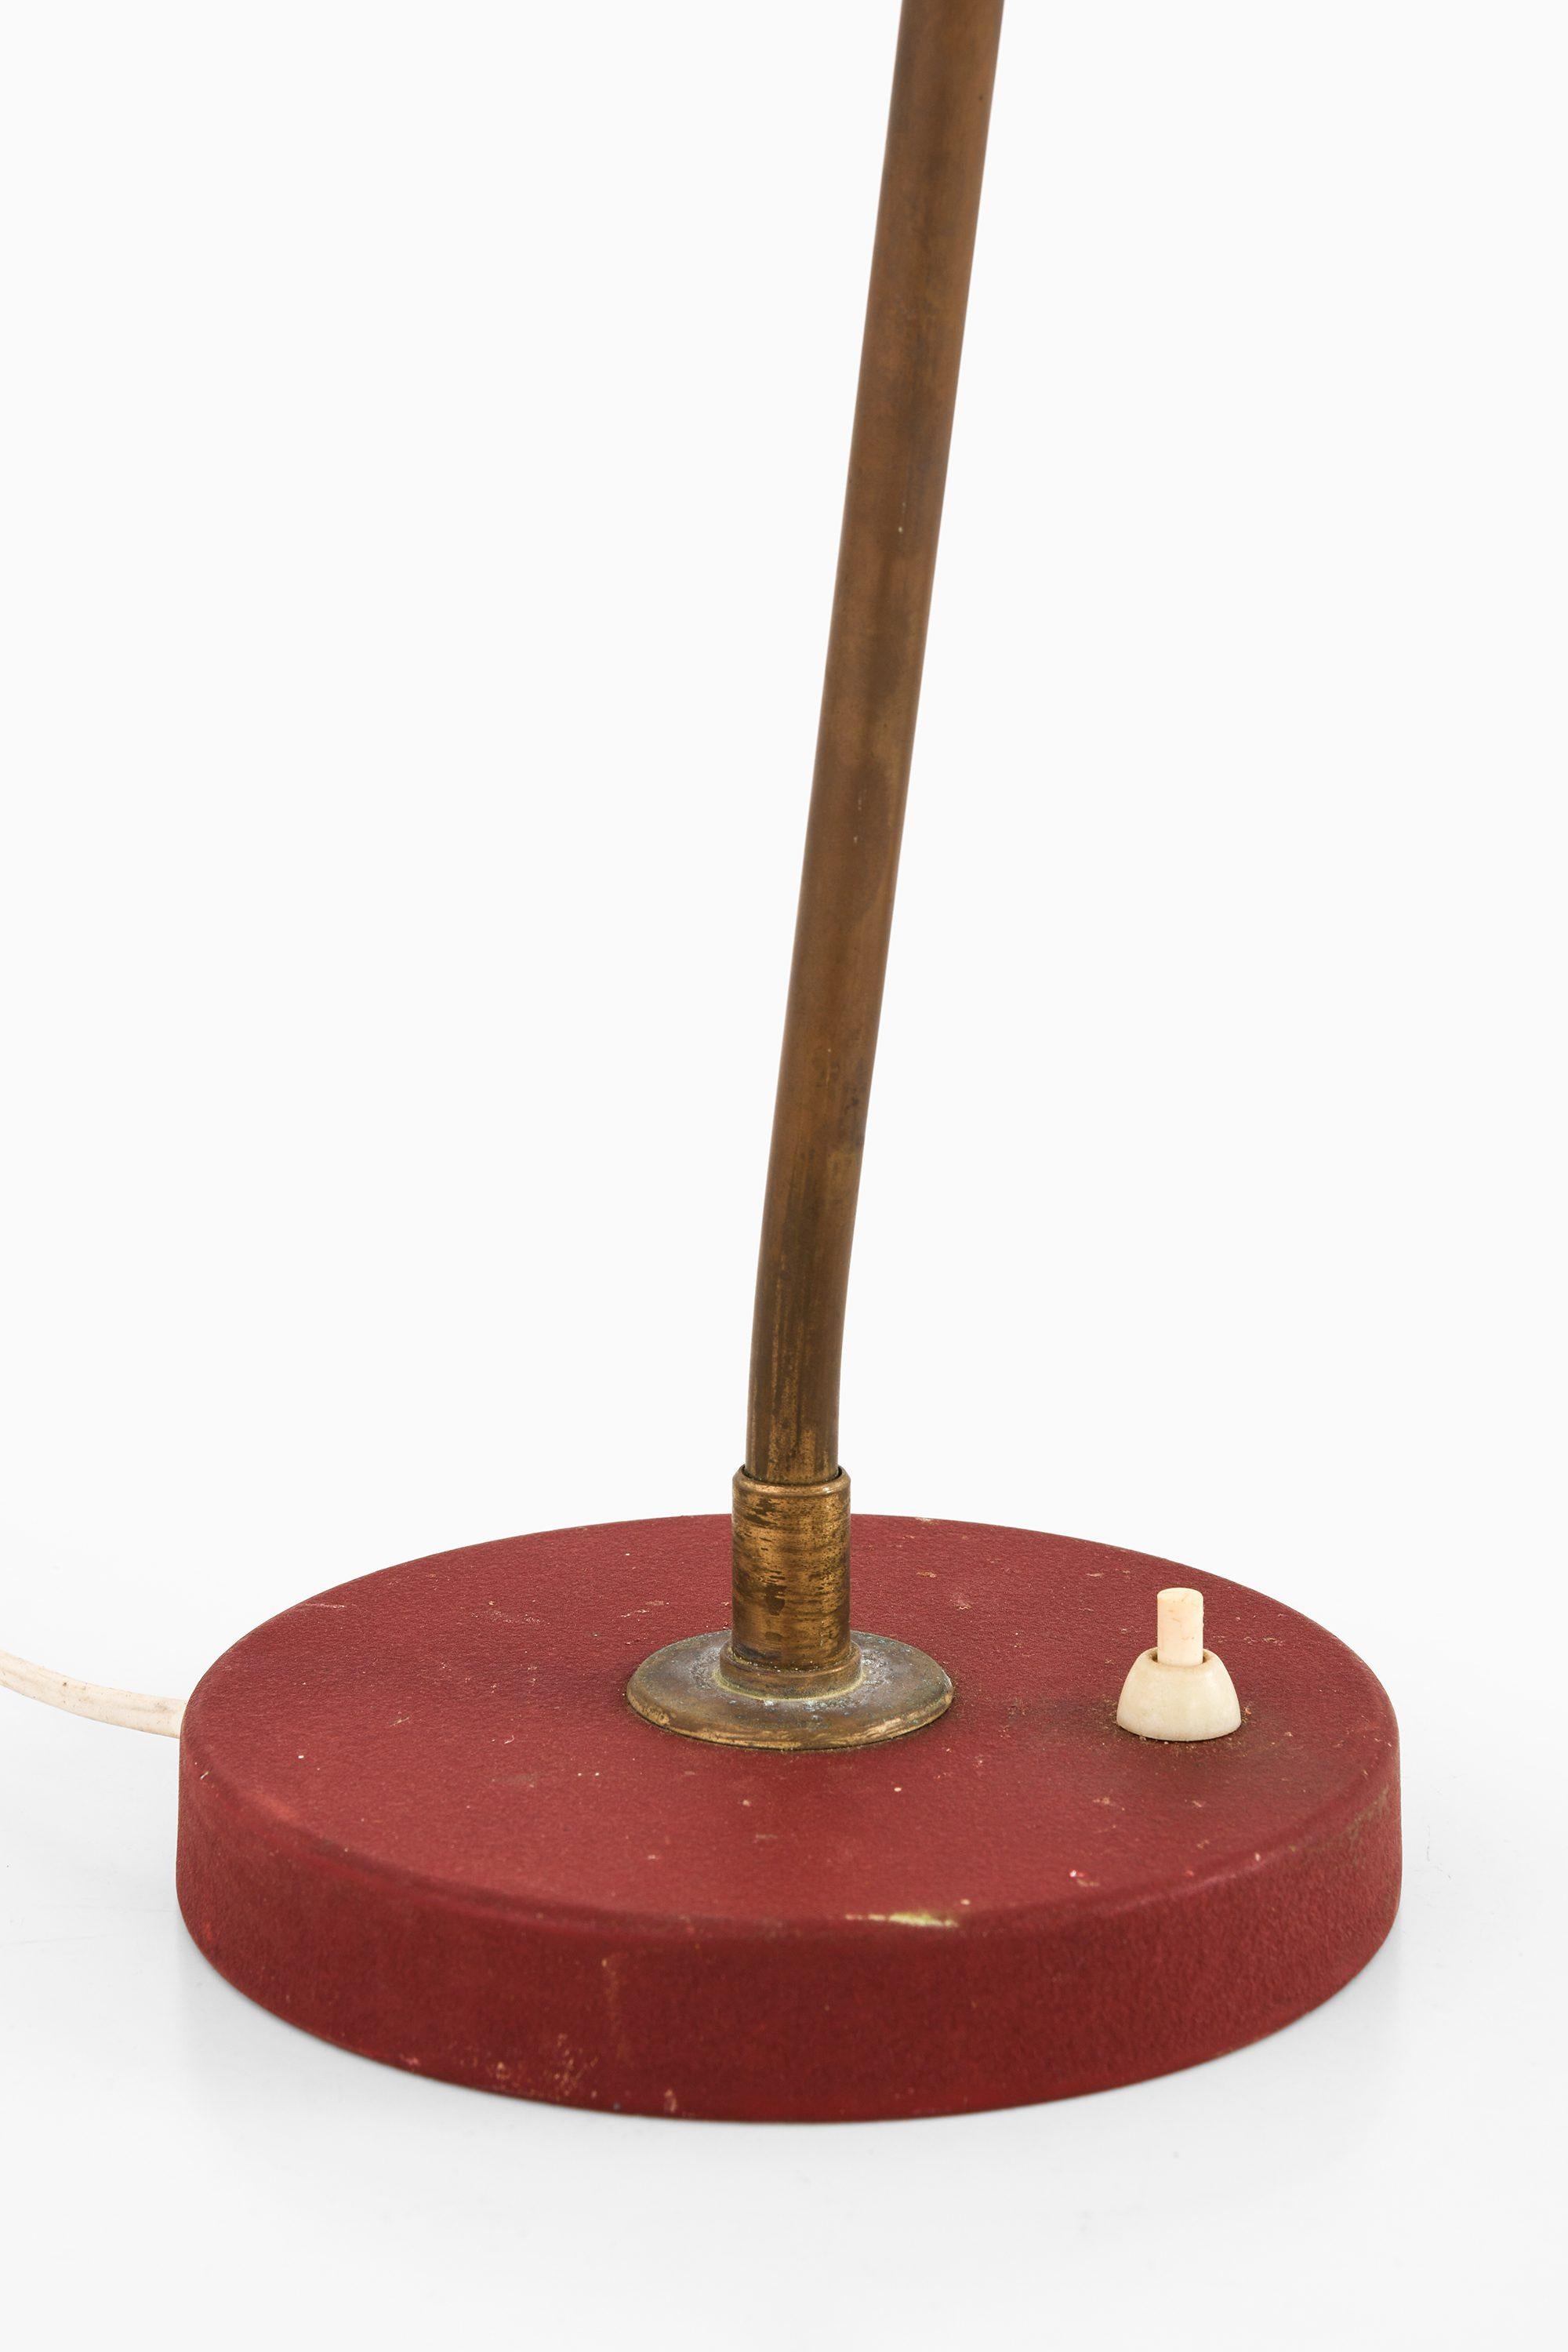 Scandinavian Modern Bertil Brisborg Table Lamp in Brass and Red Lacquer, 1950’s Nordiska Kompaniet For Sale